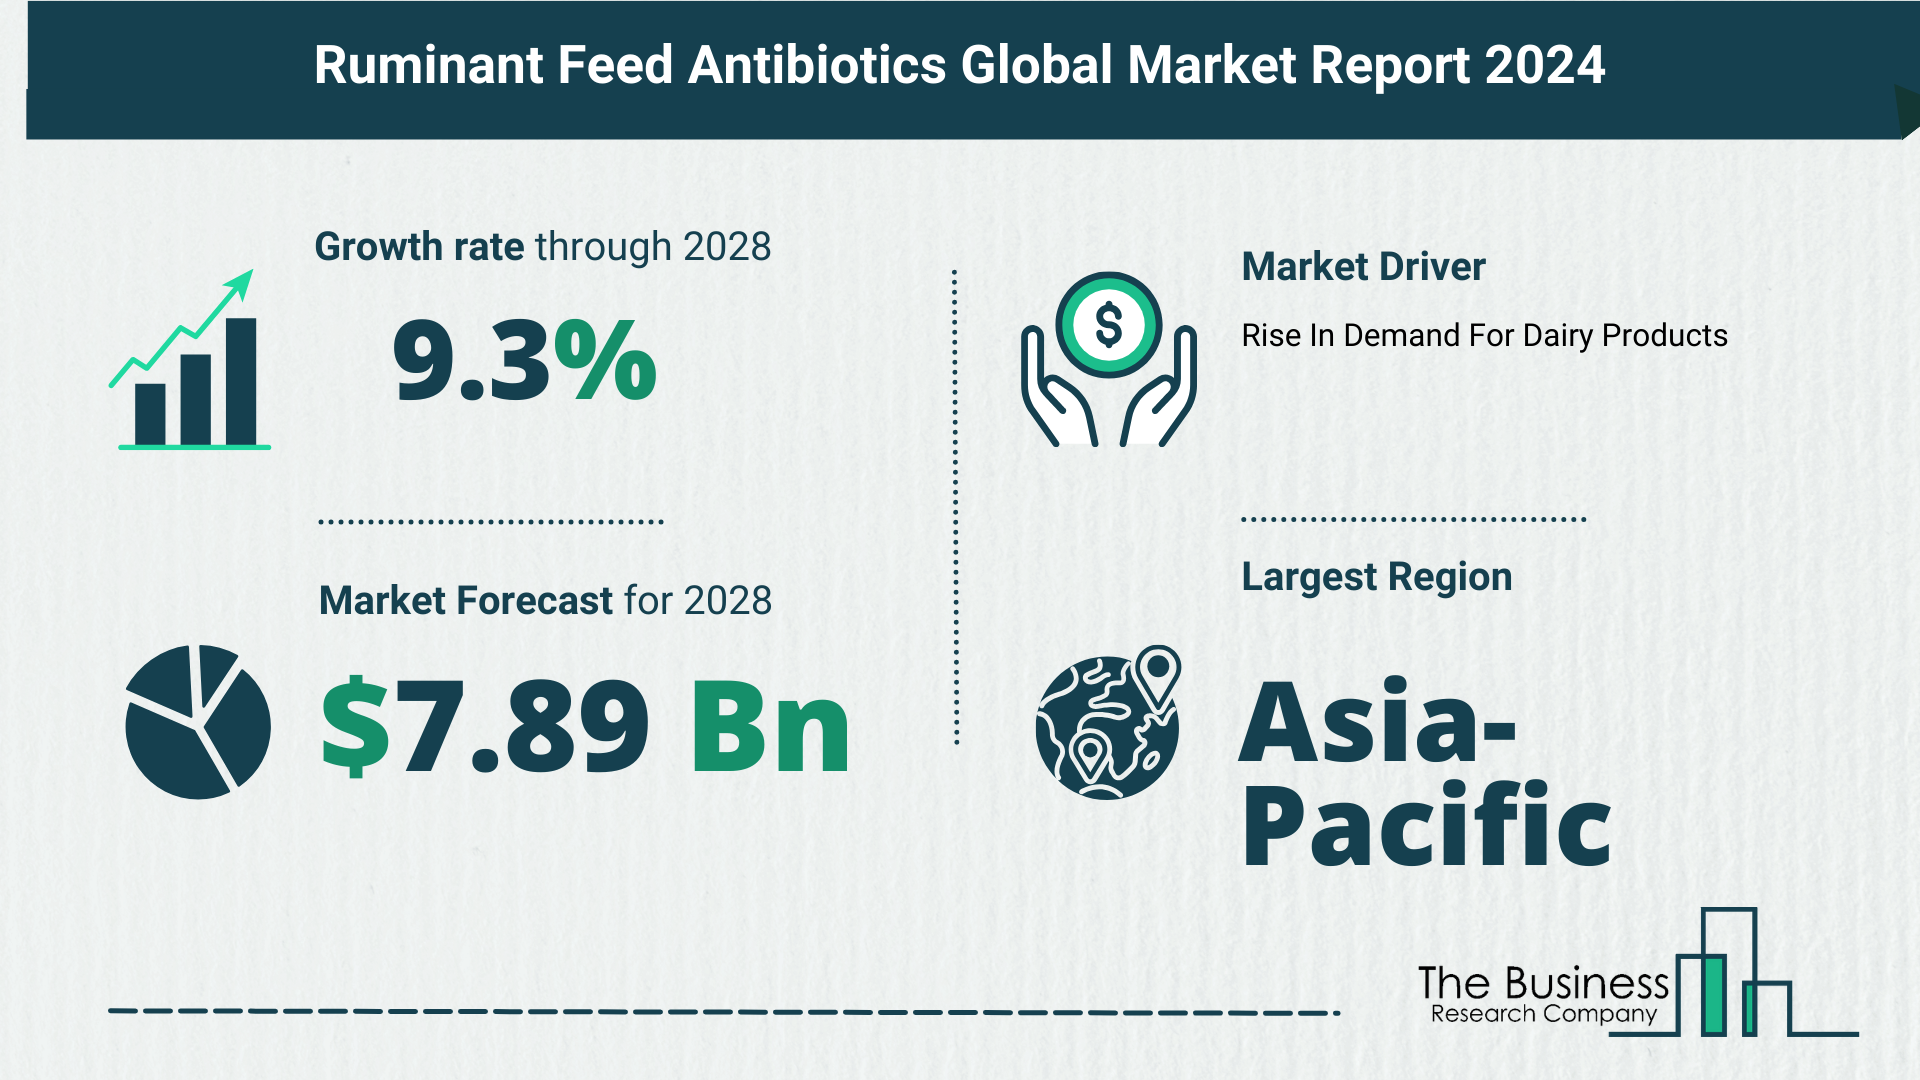 Global Ruminant Feed Antibiotics Market